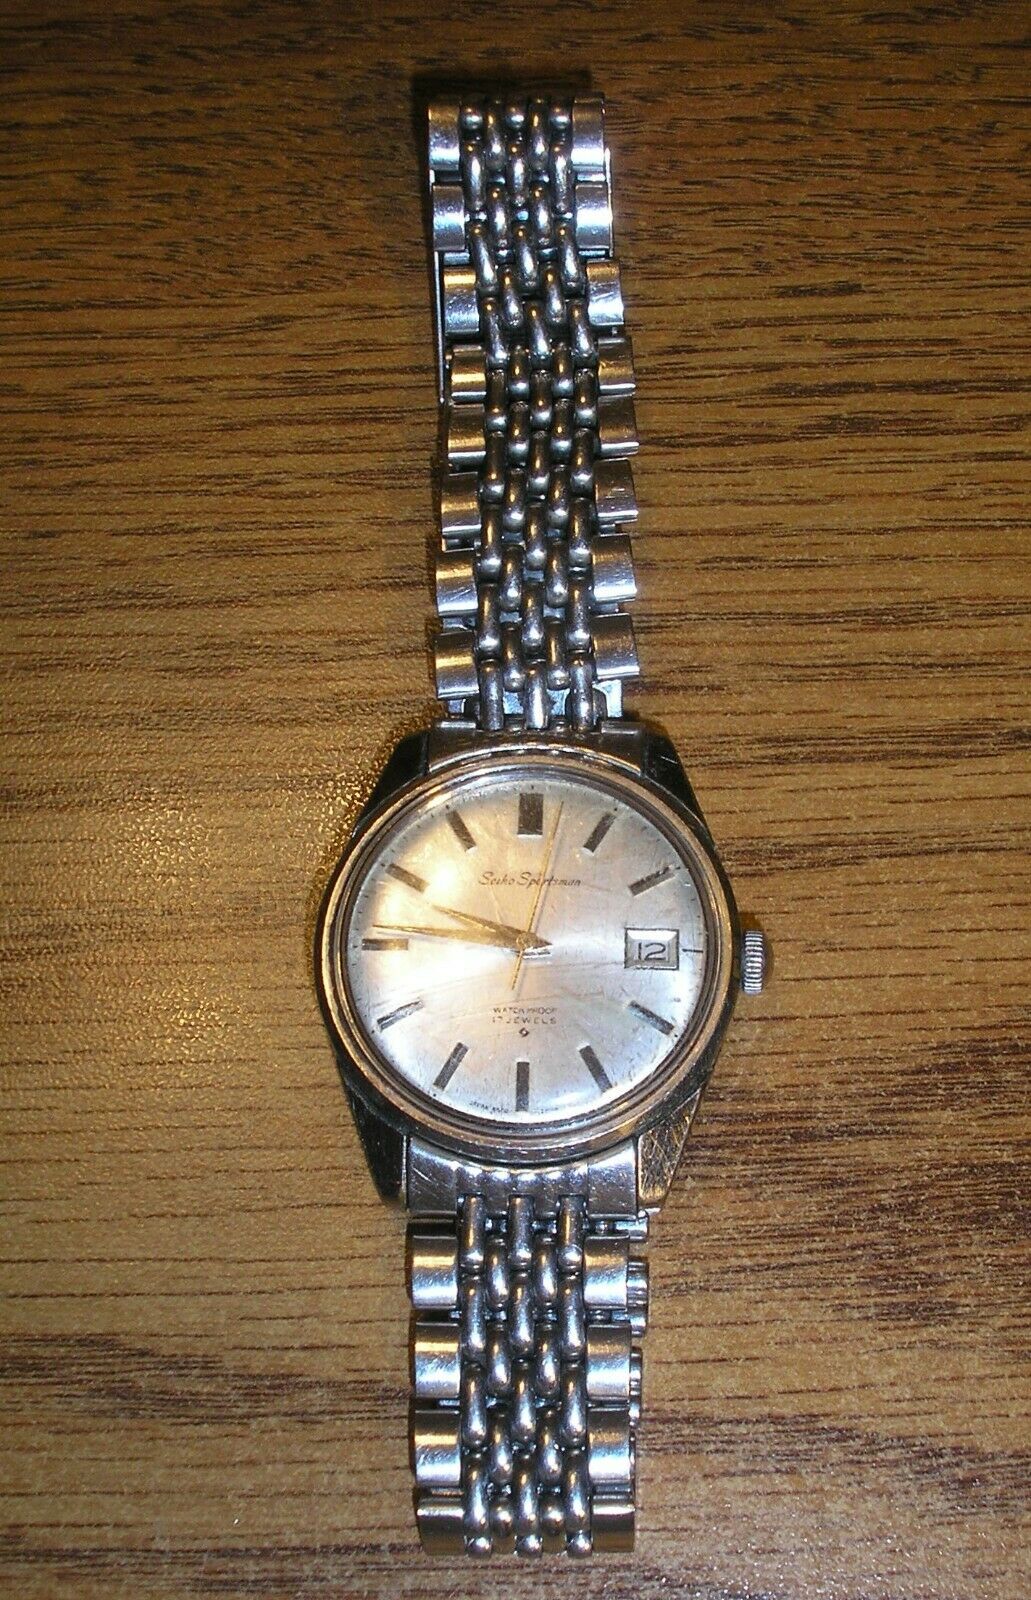 Vintage Men's Stainless Seiko Sportsman 17 jewel wristwatch 6602